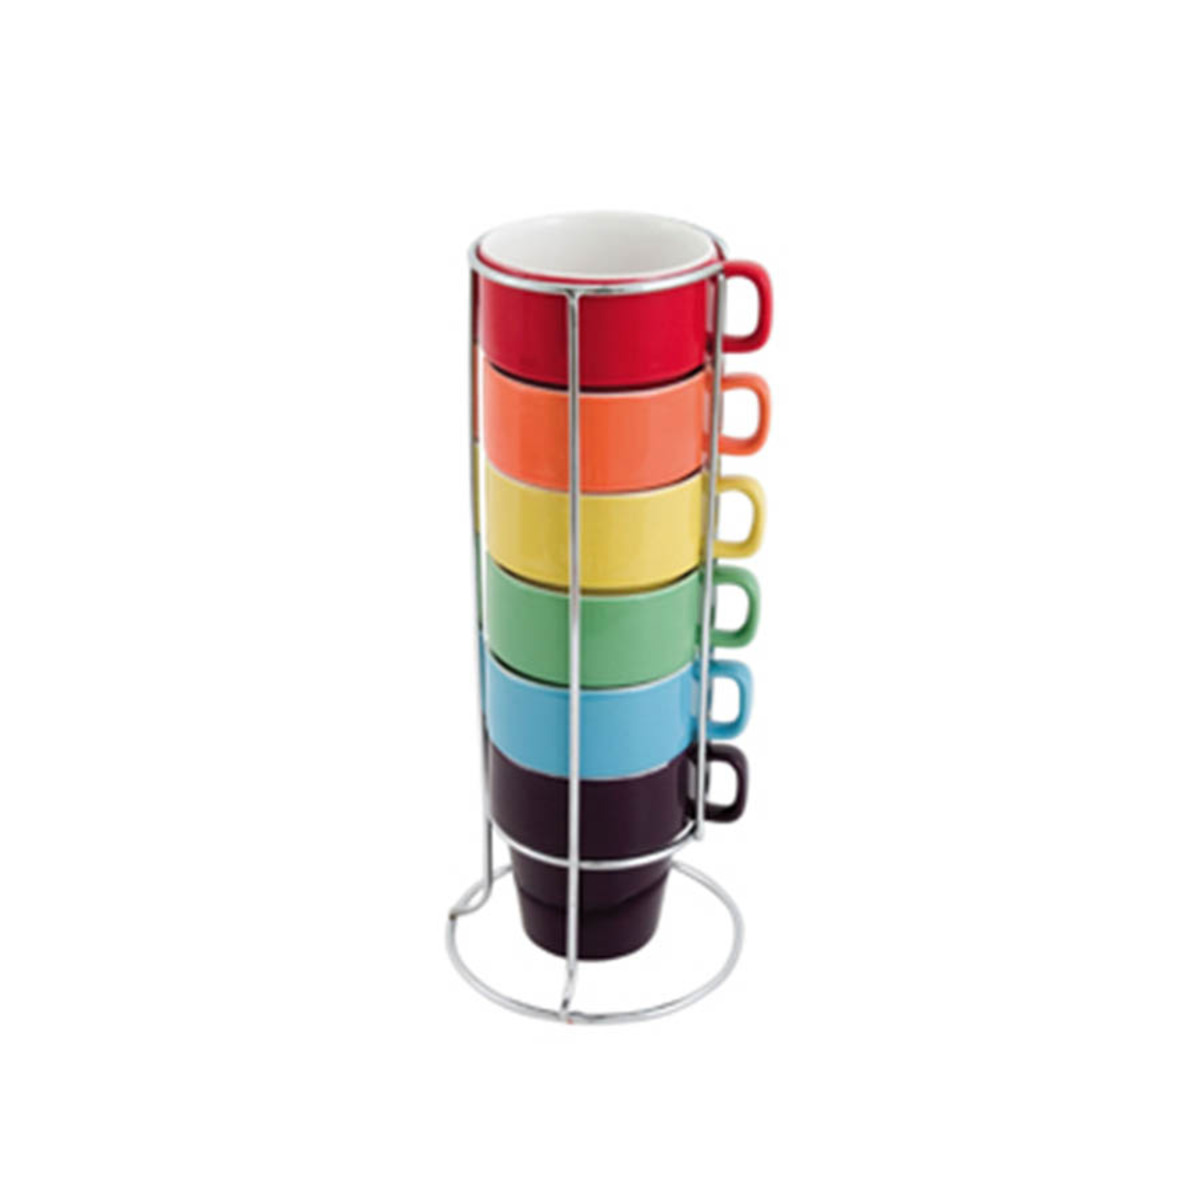 Set de 6 tasses cappuccino multicolores en céramique